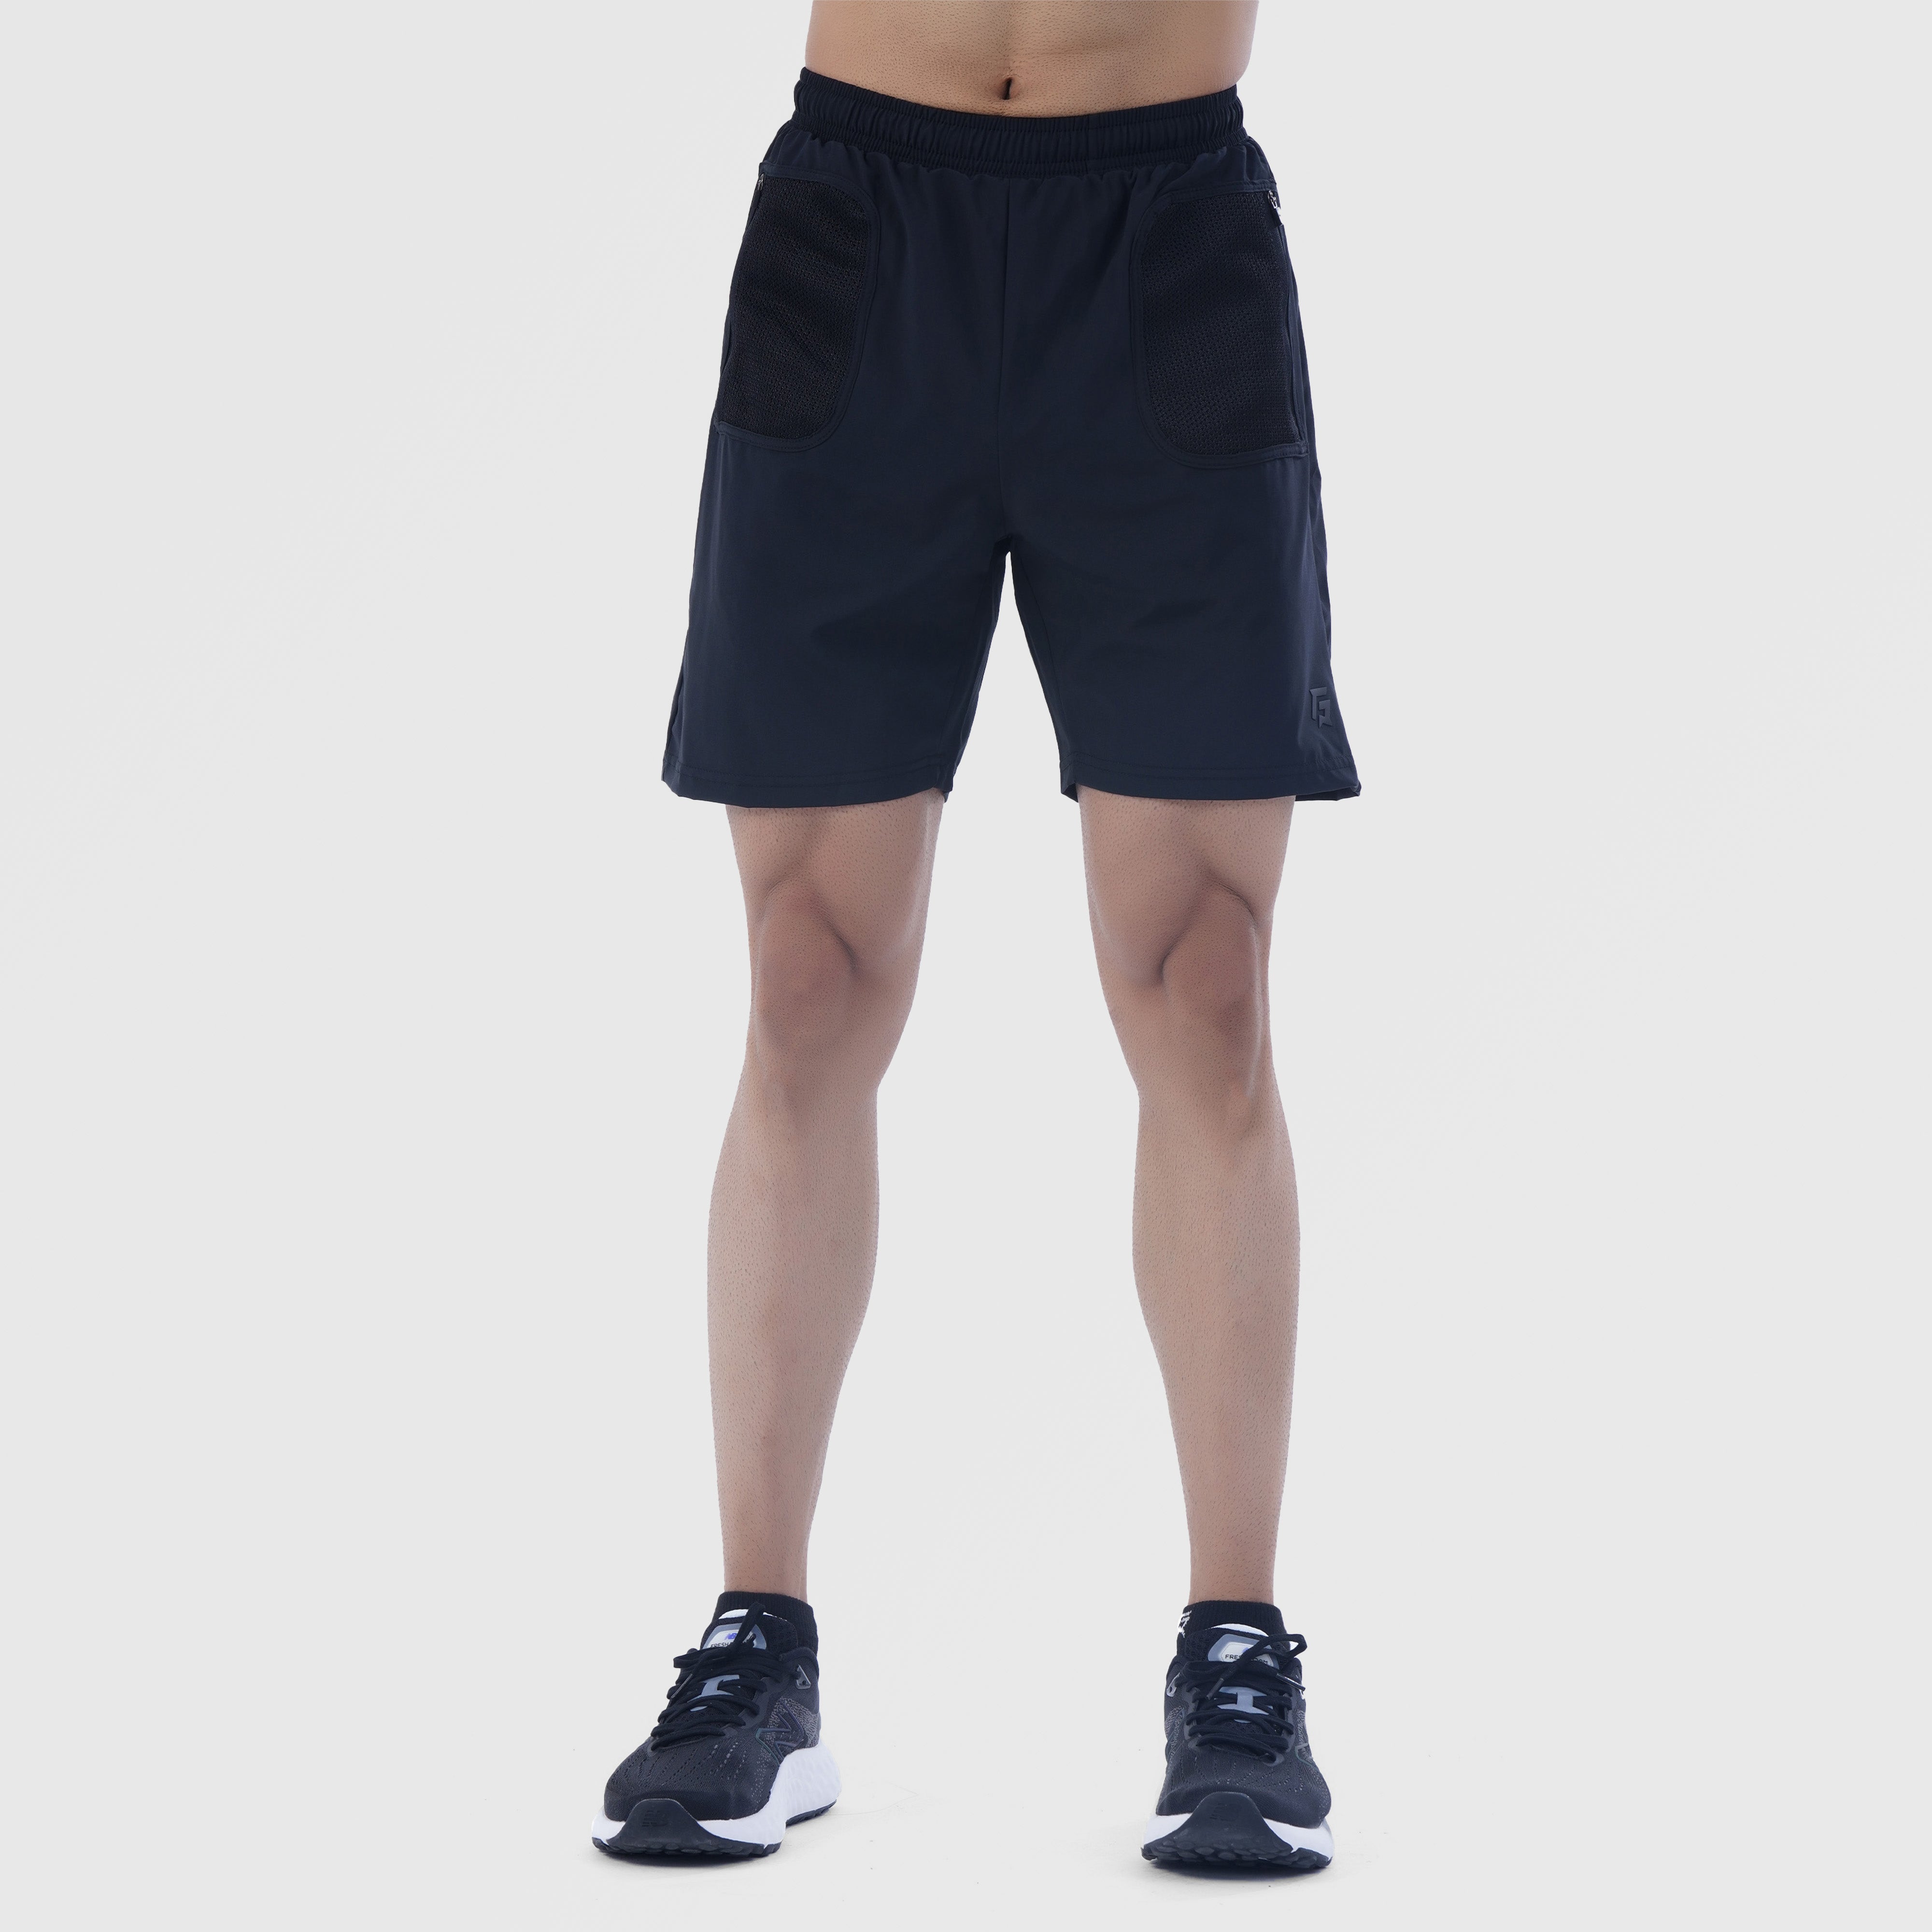 Performa Fit Shorts (Black)